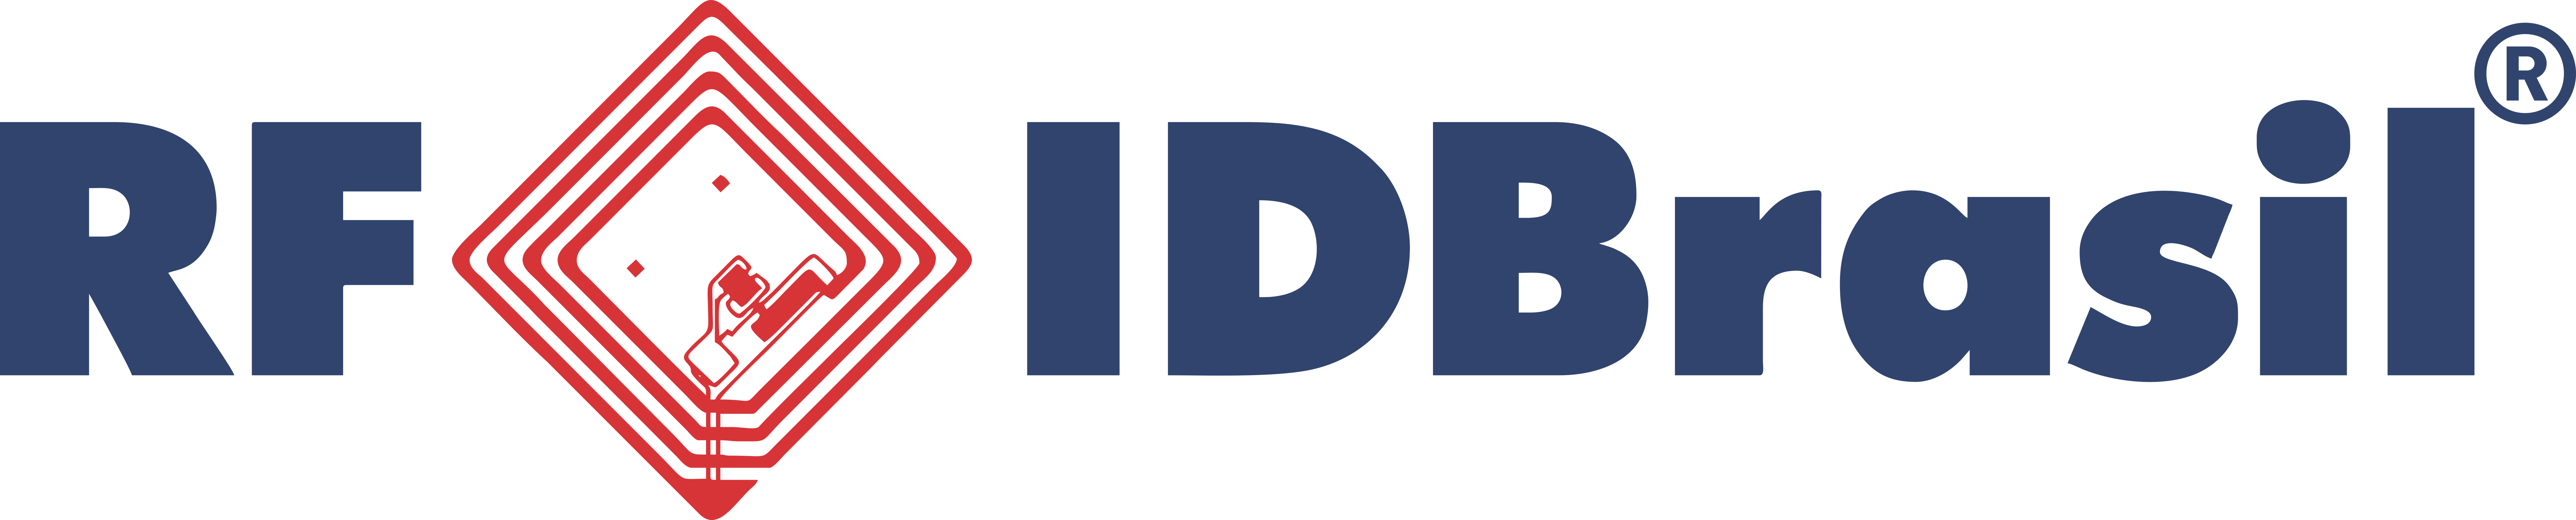 Logomarca RFID Brasil png